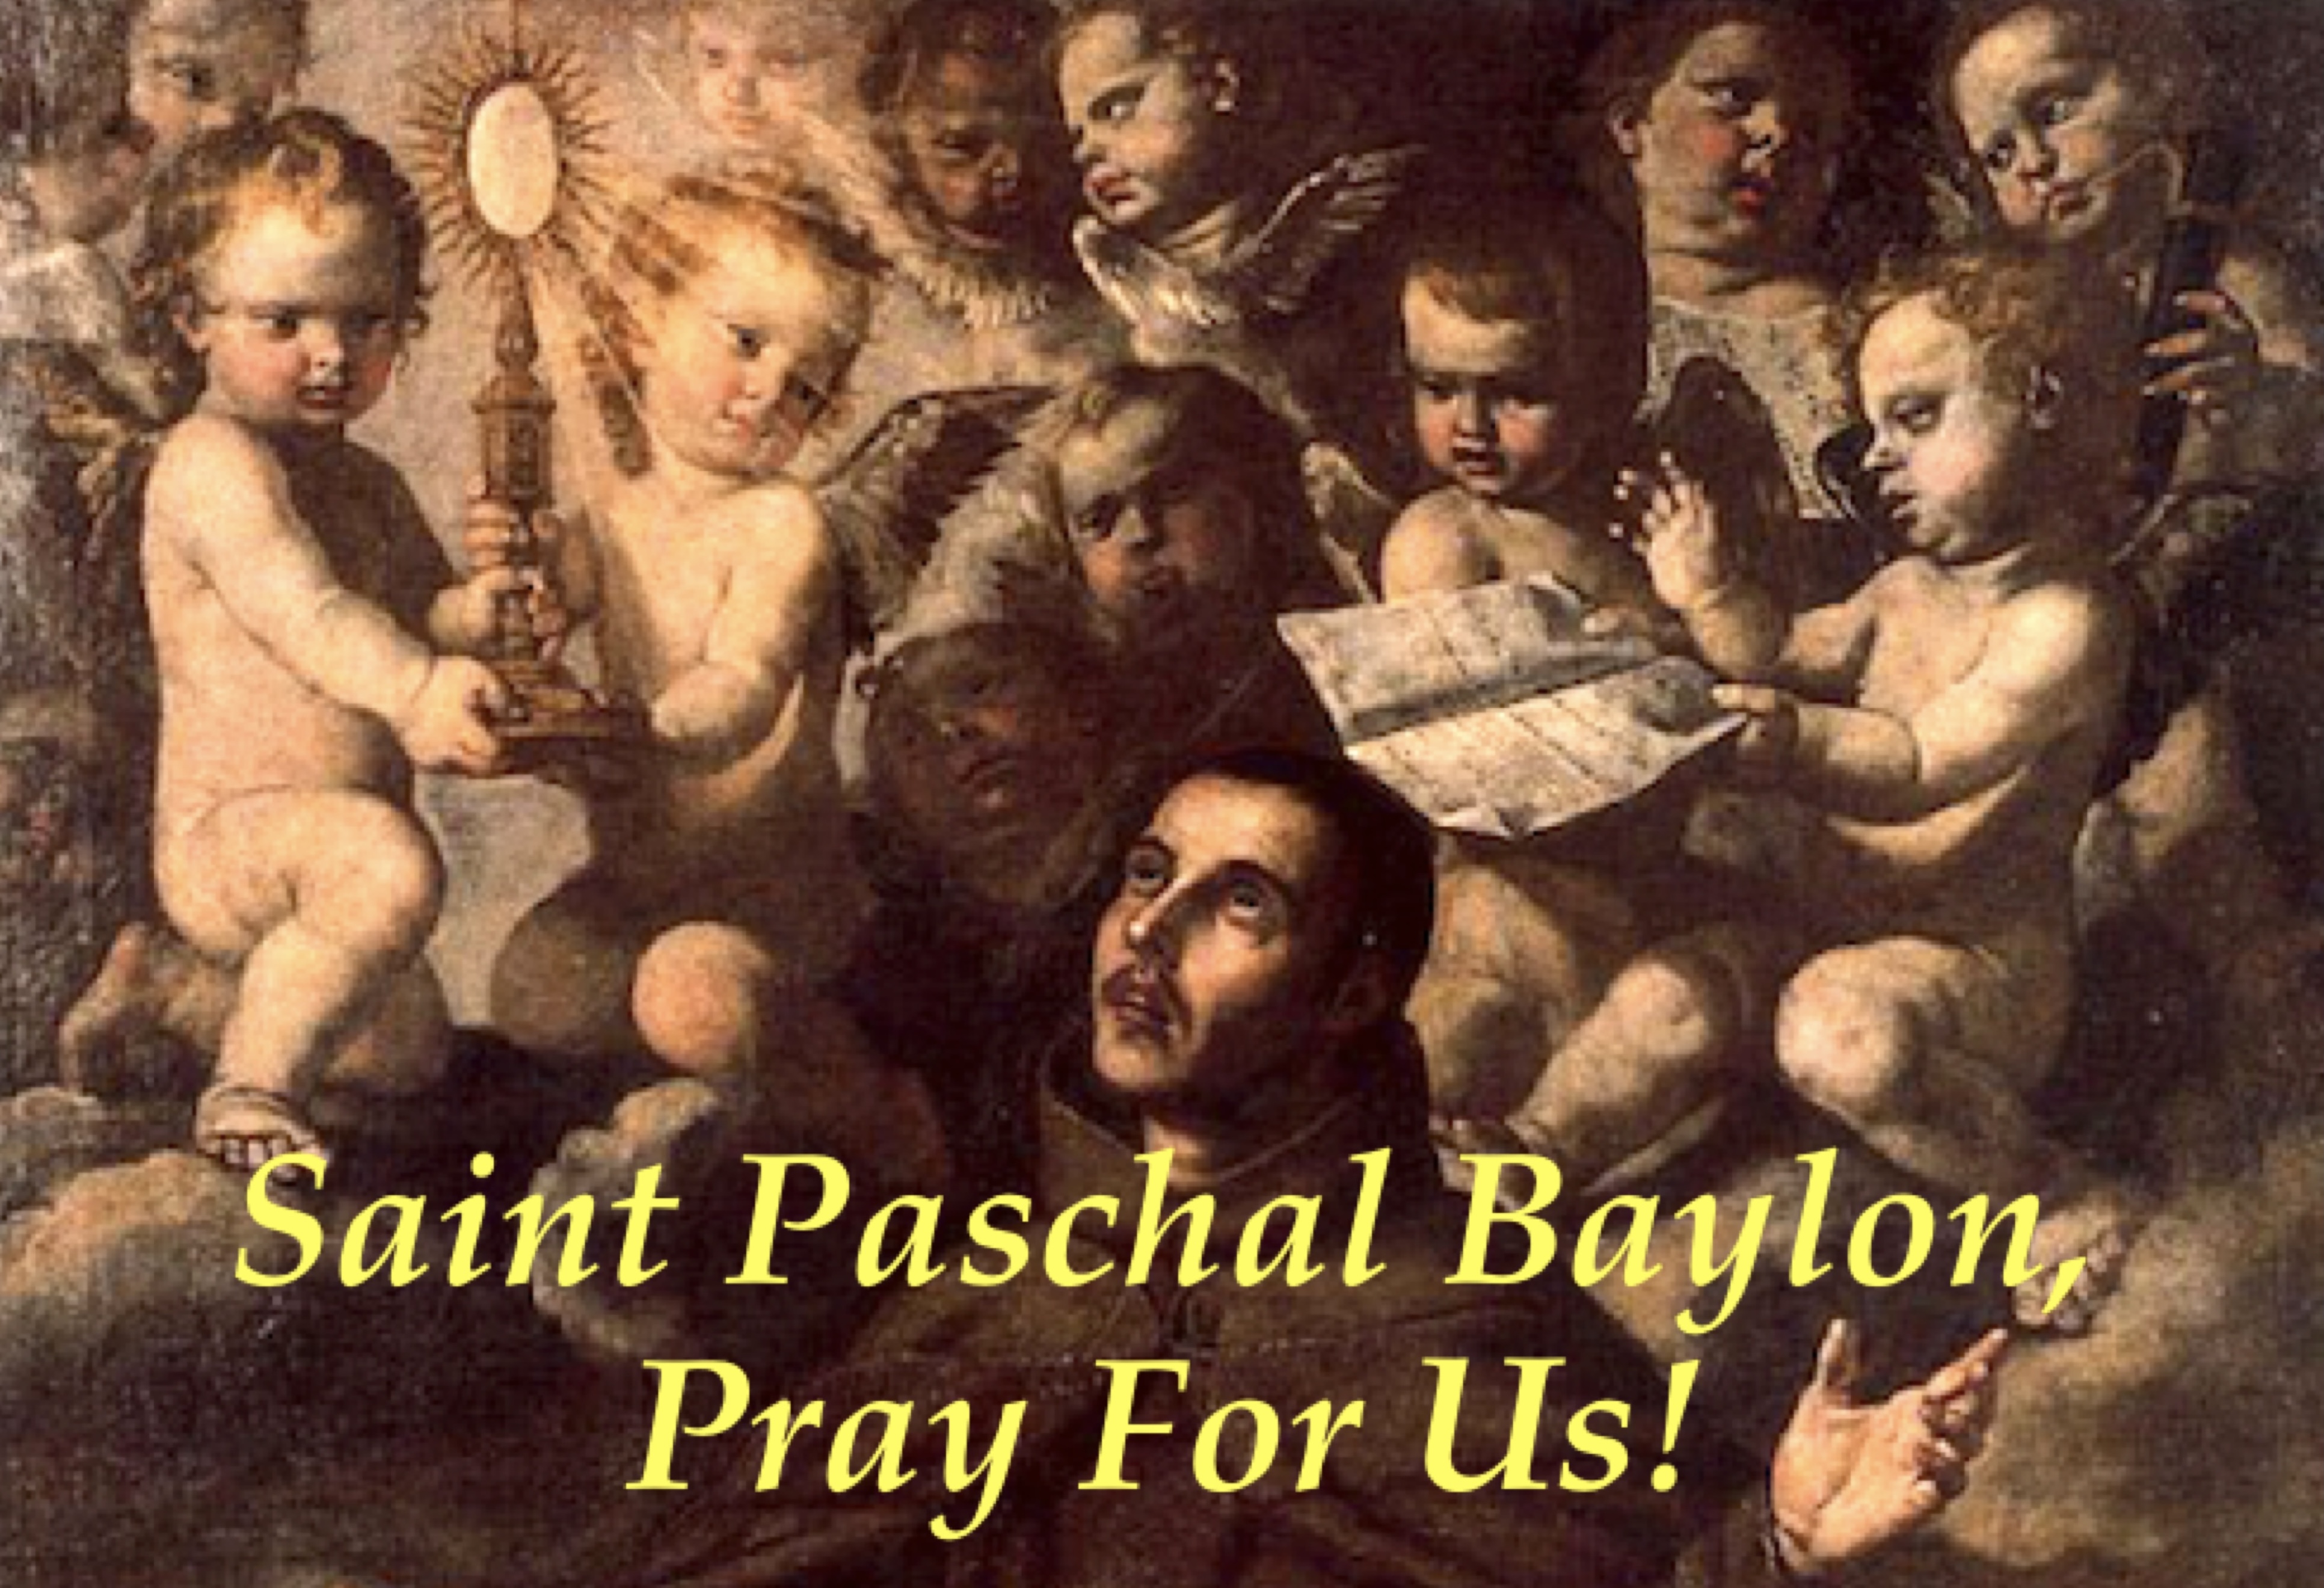 17th May - Saint Paschal Baylon